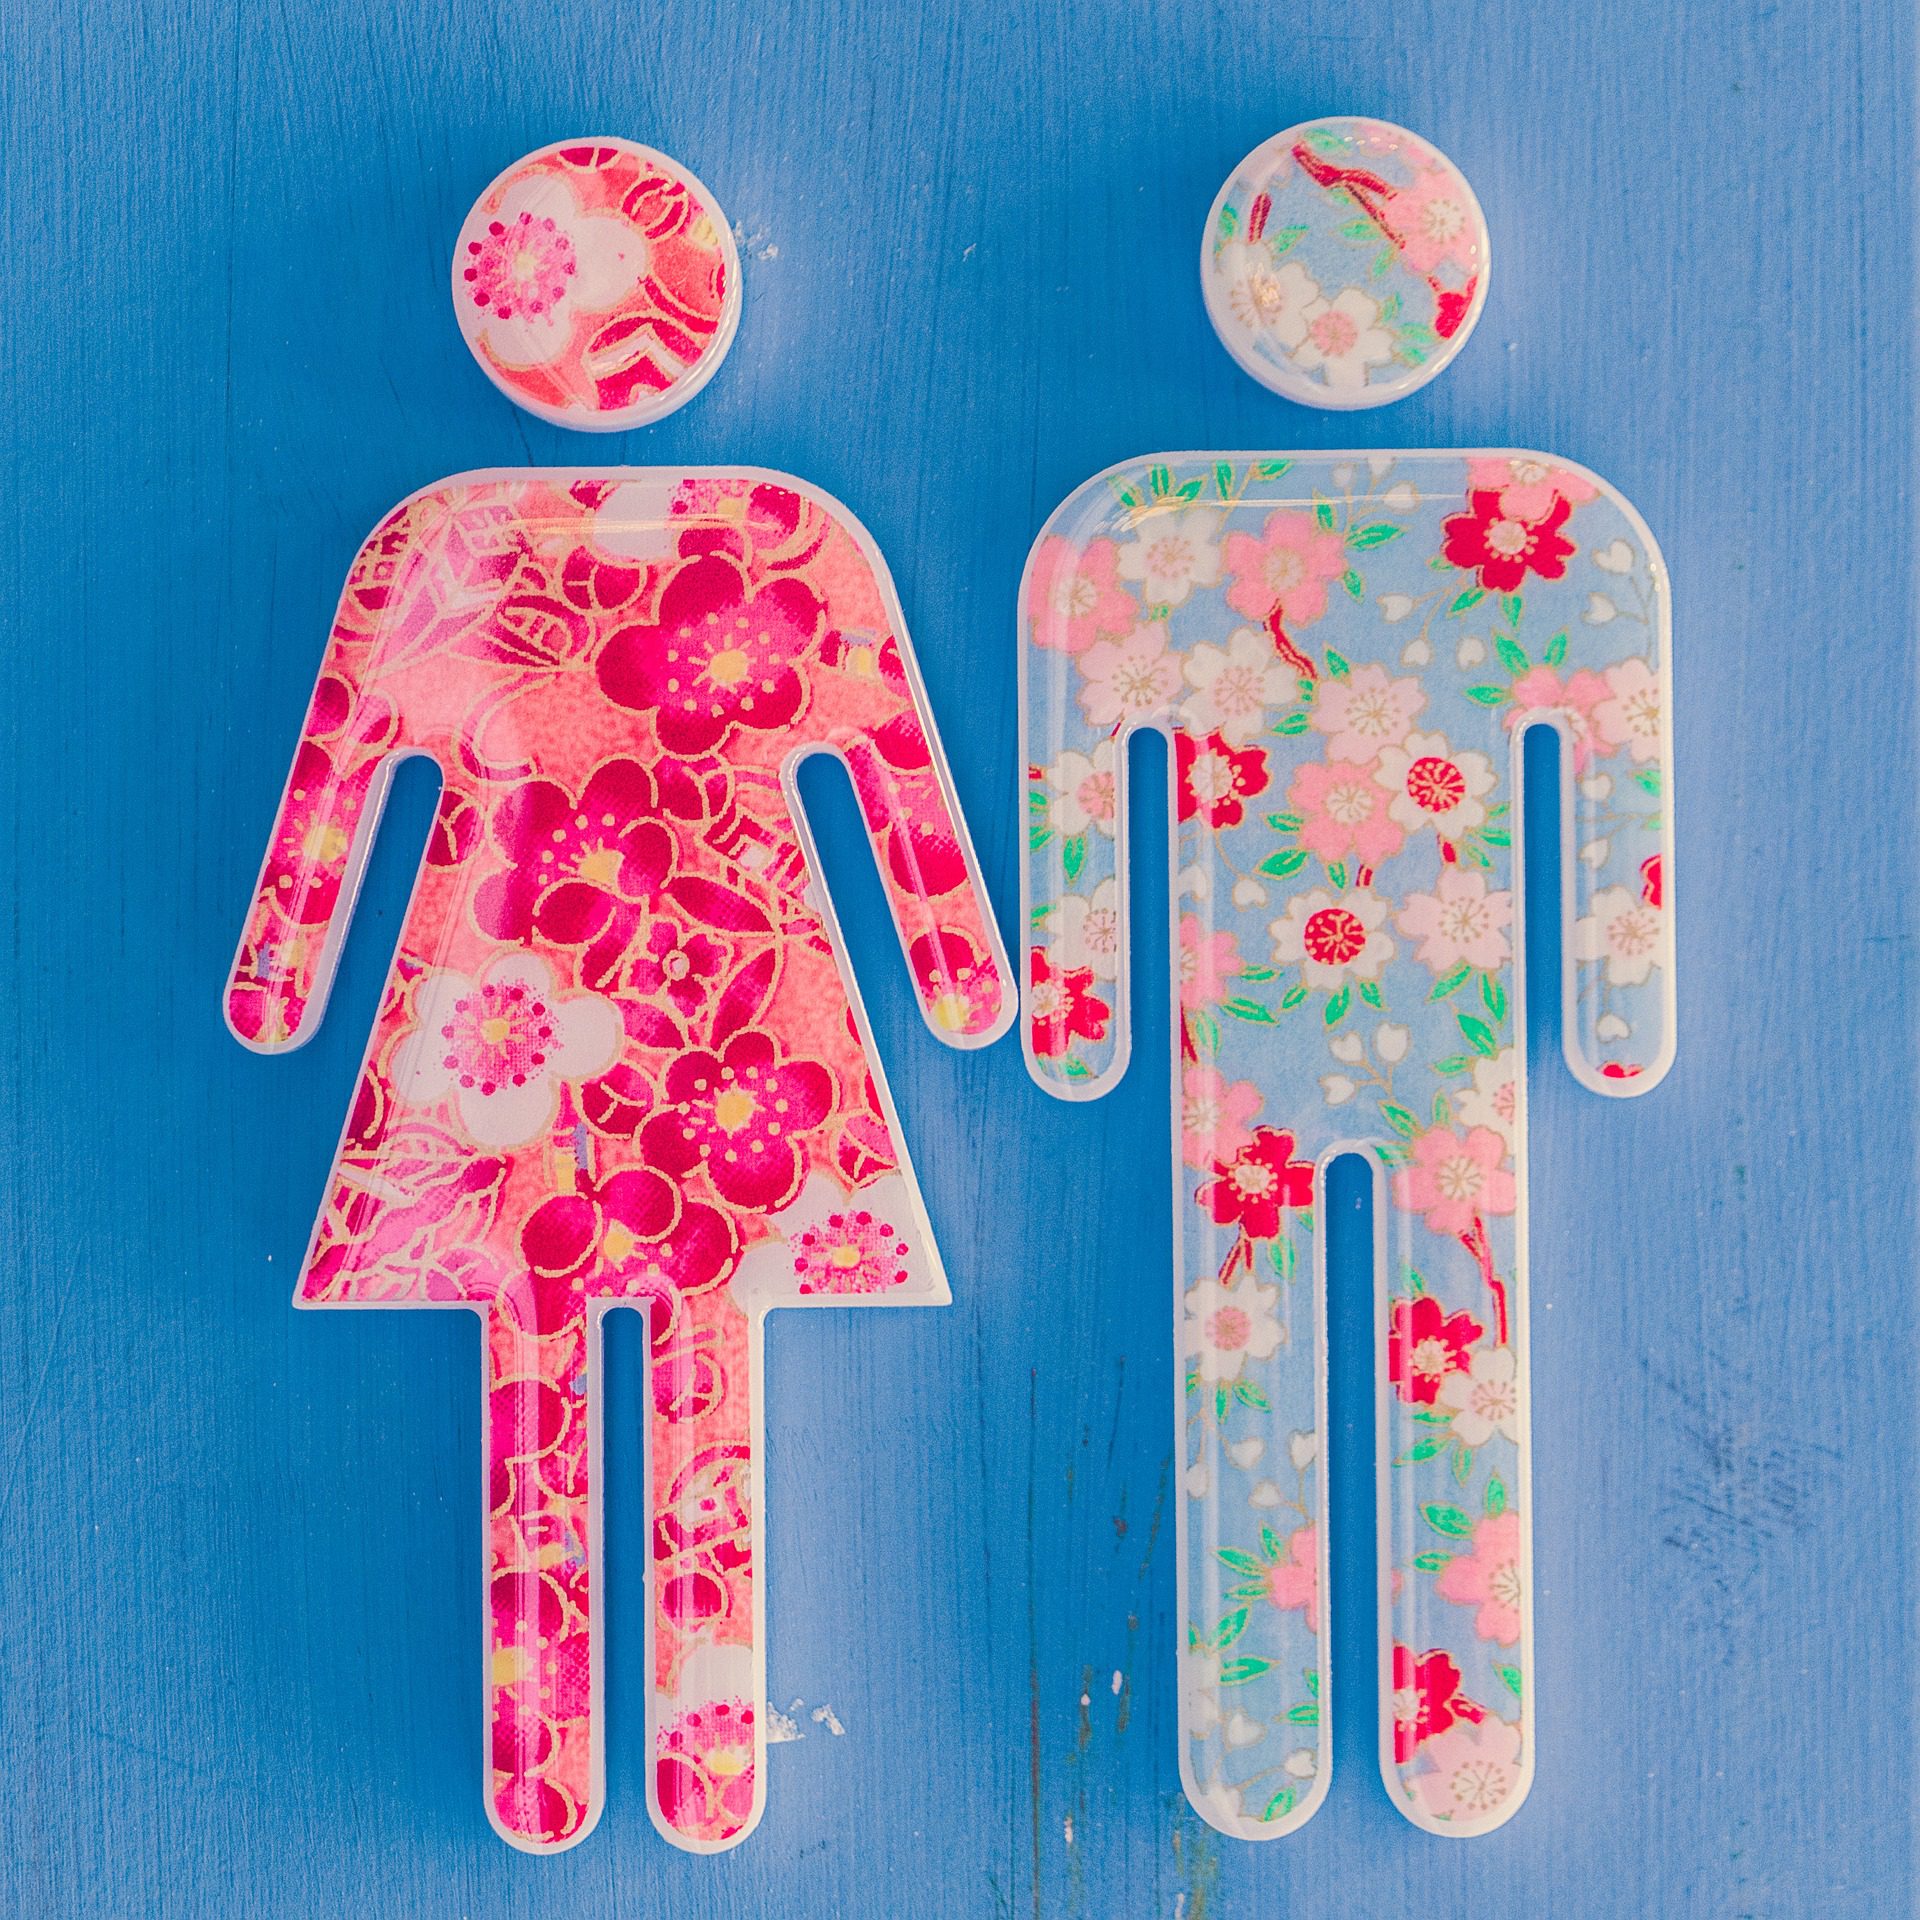 gendered bathroom symbols filled with flower print on a blue background